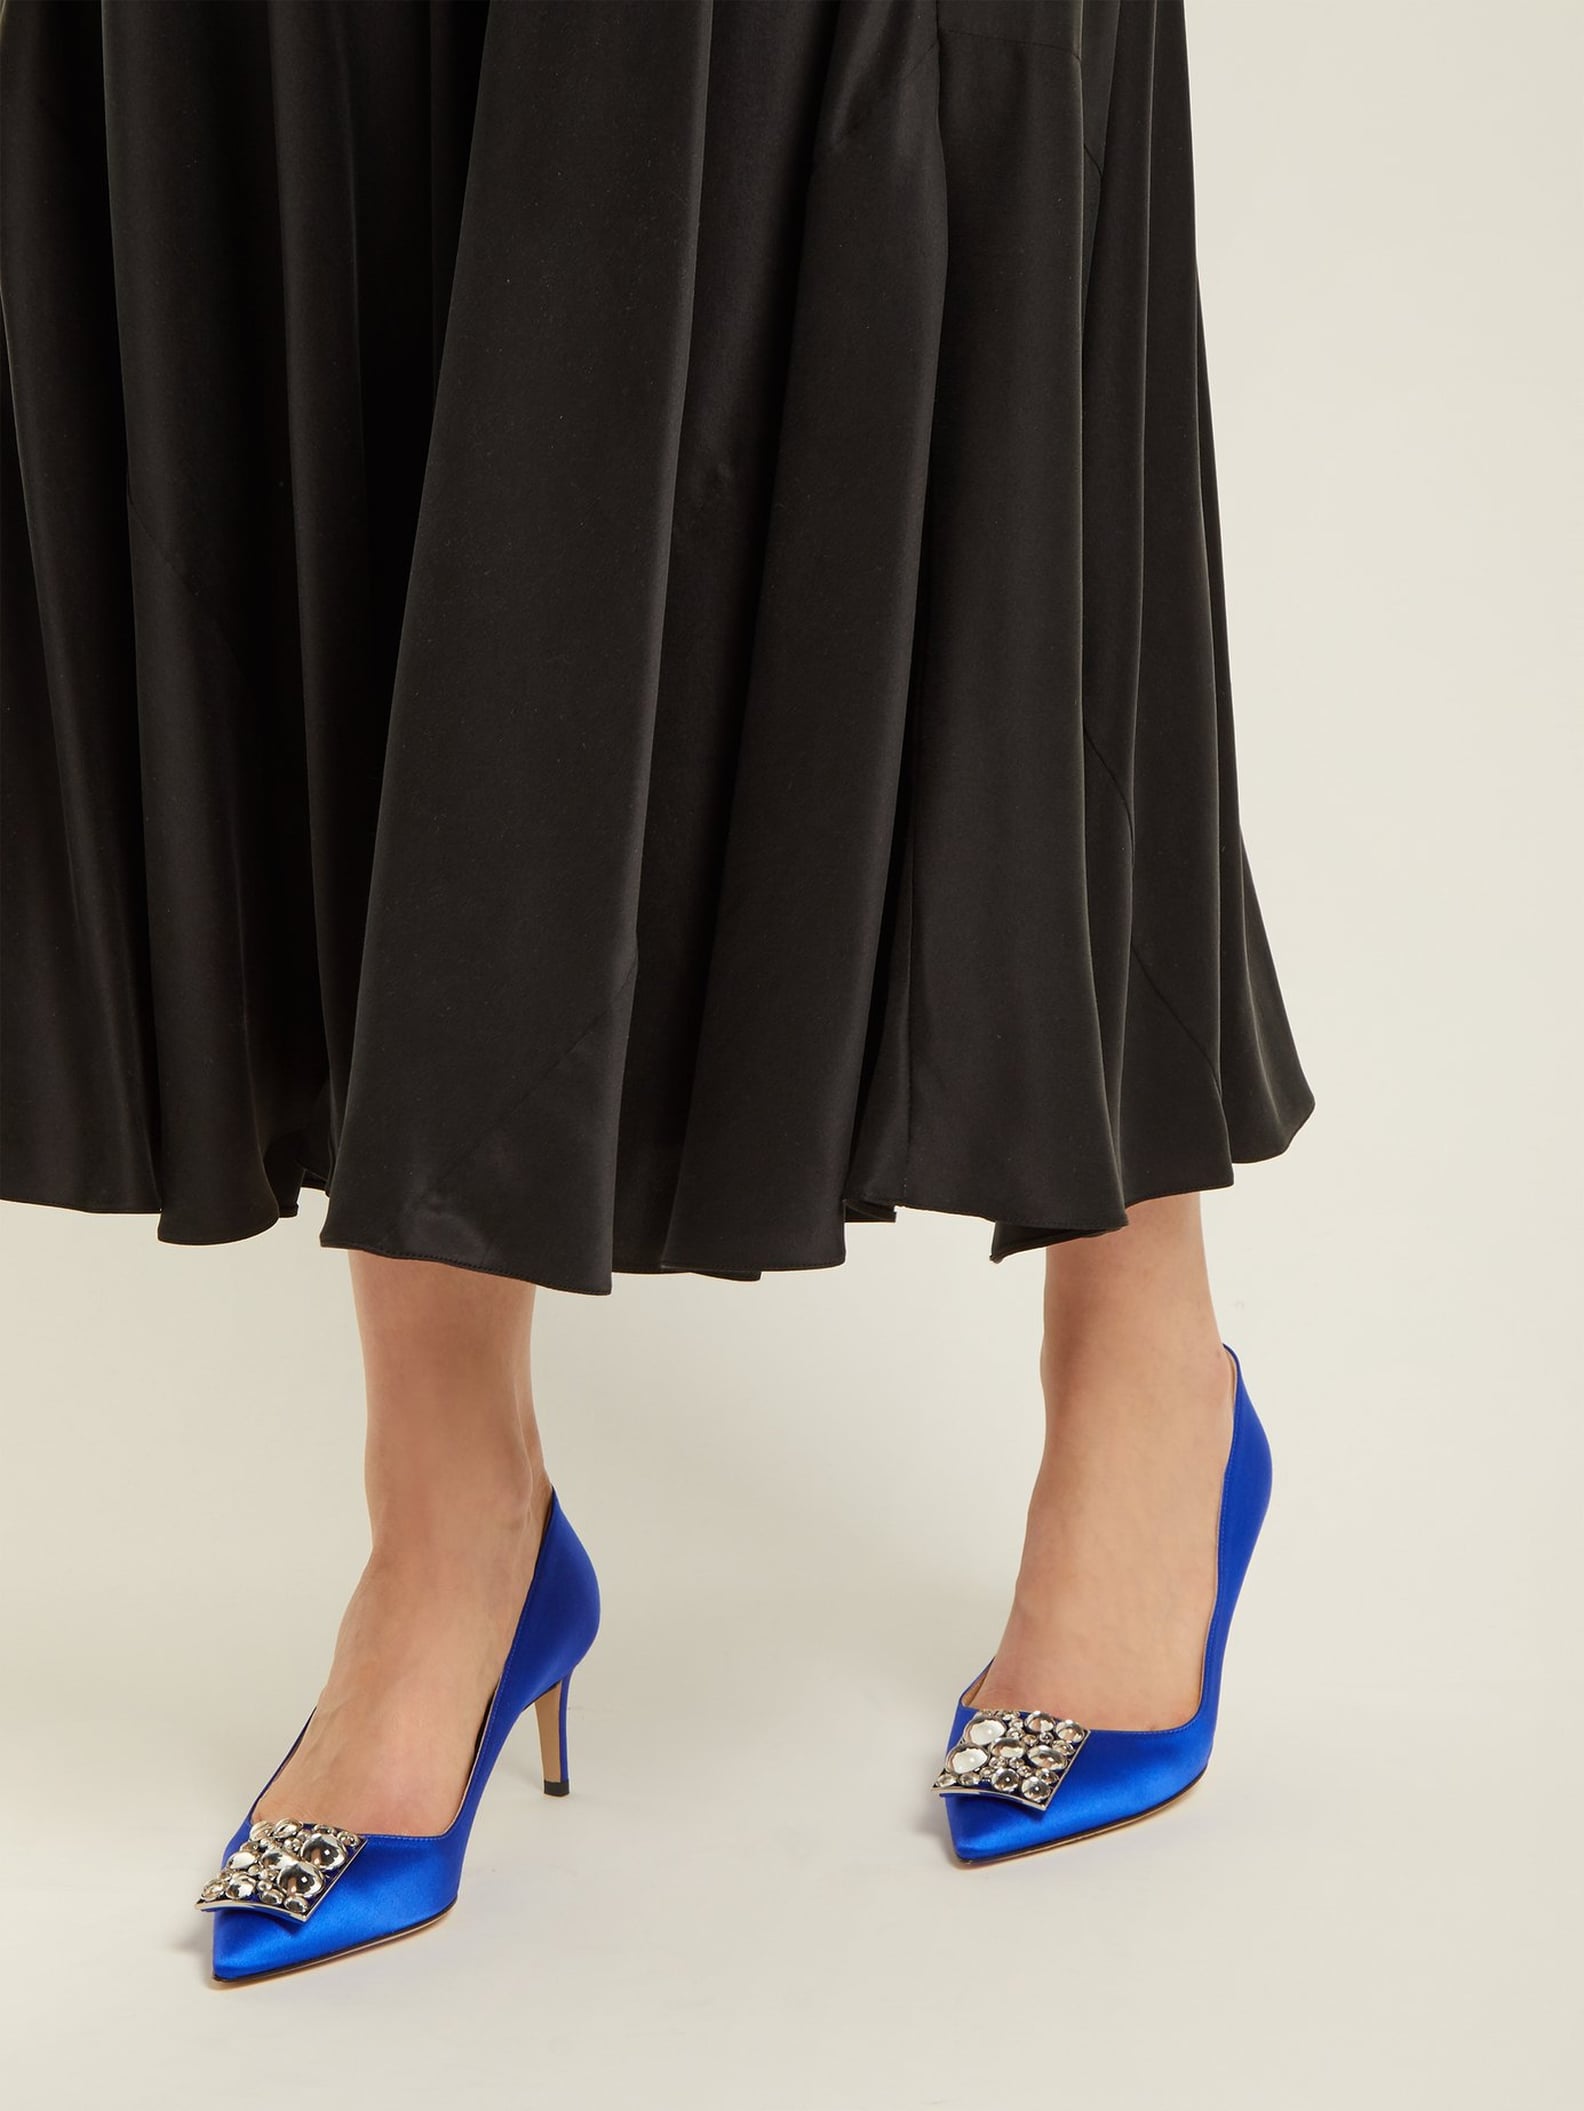 Princess Beatrice's Blue Heels | POPSUGAR Fashion